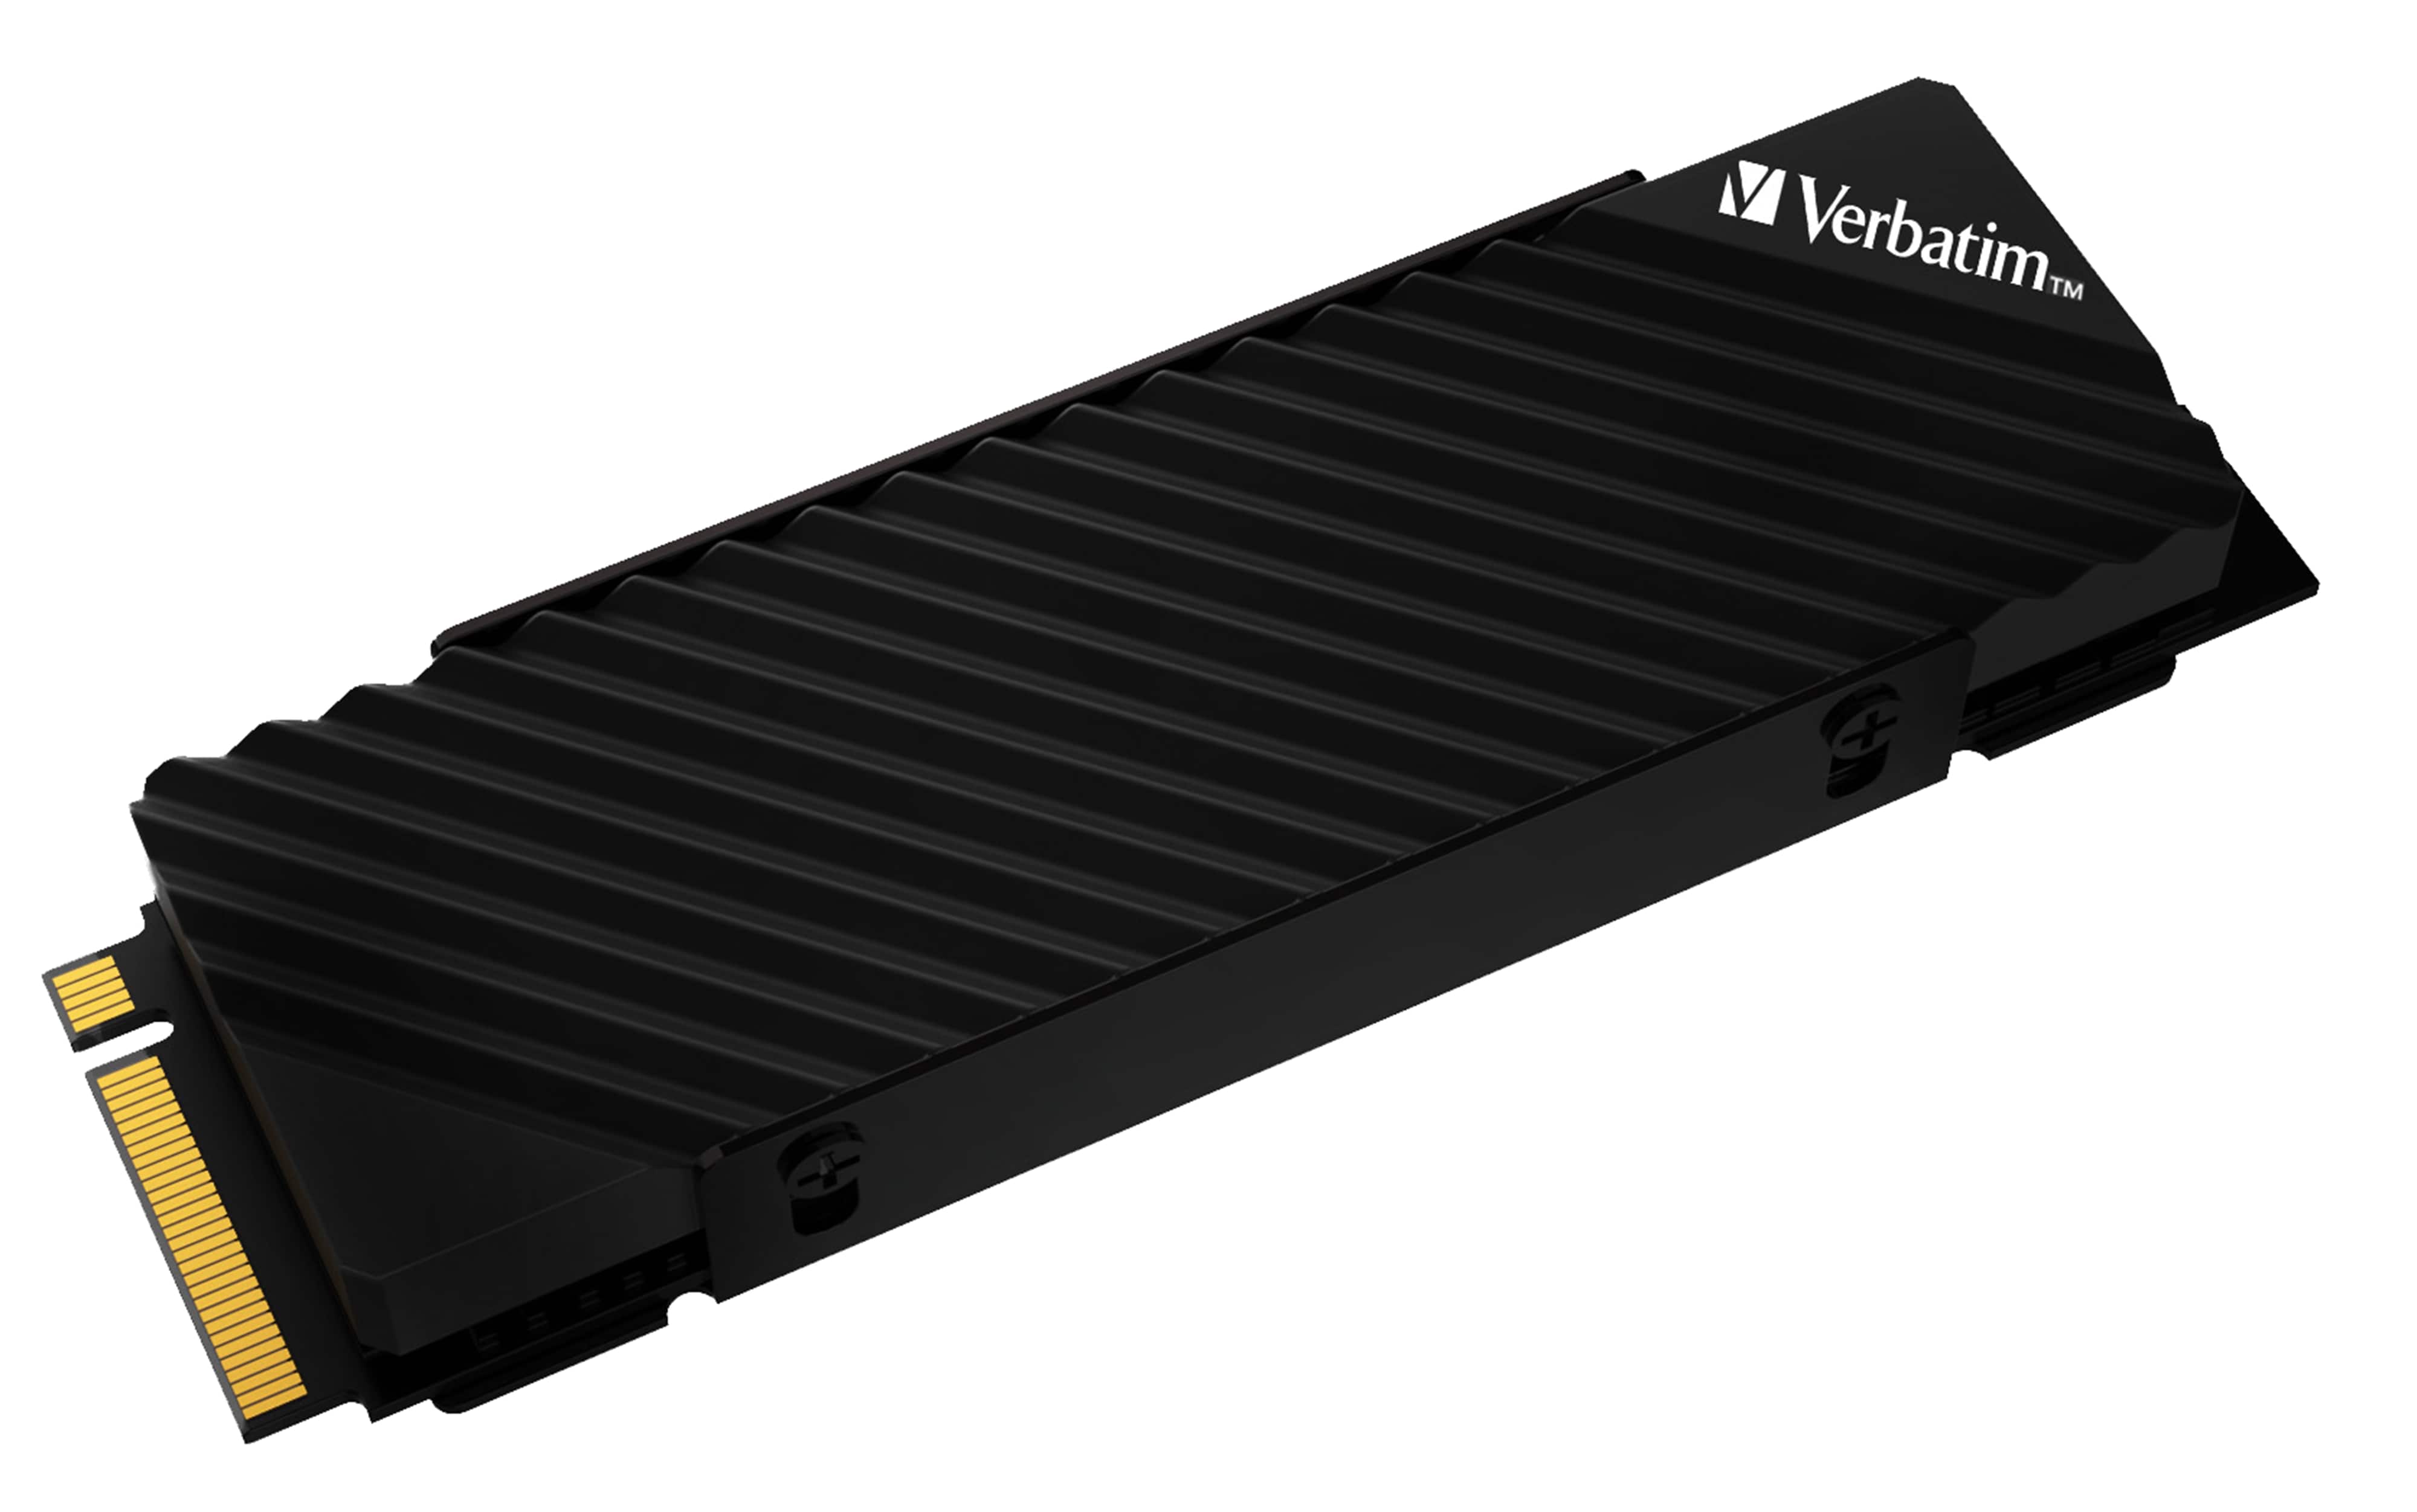 VERBATIM M.2 SSD VI7000 4TB